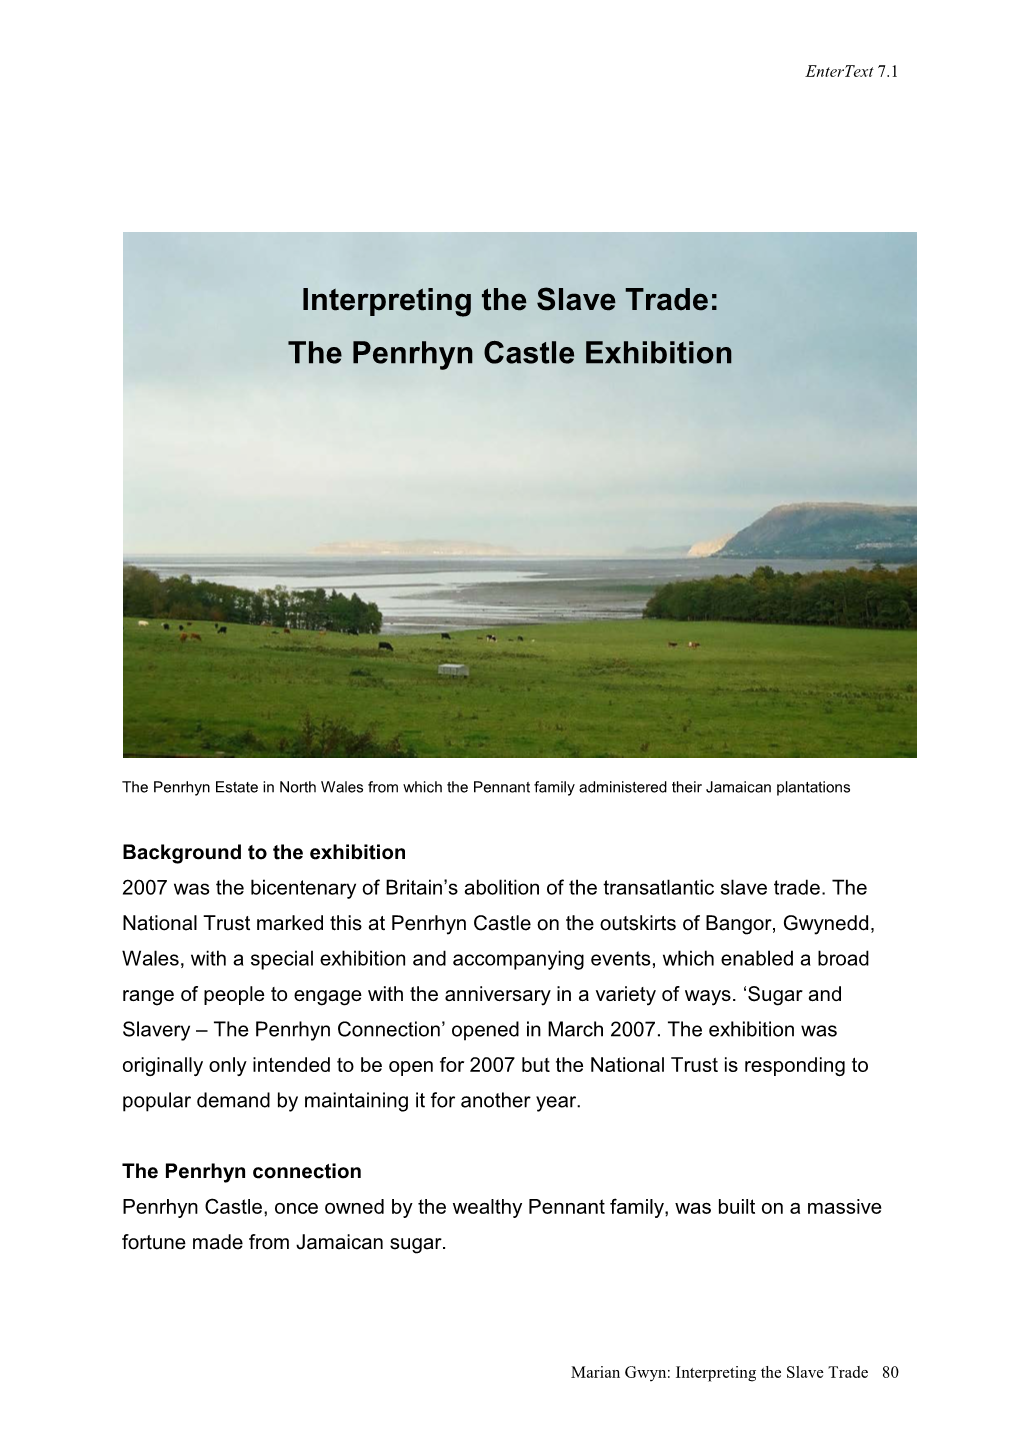 Interpreting the Slave Trade: the Penrhyn Castle Exhibition